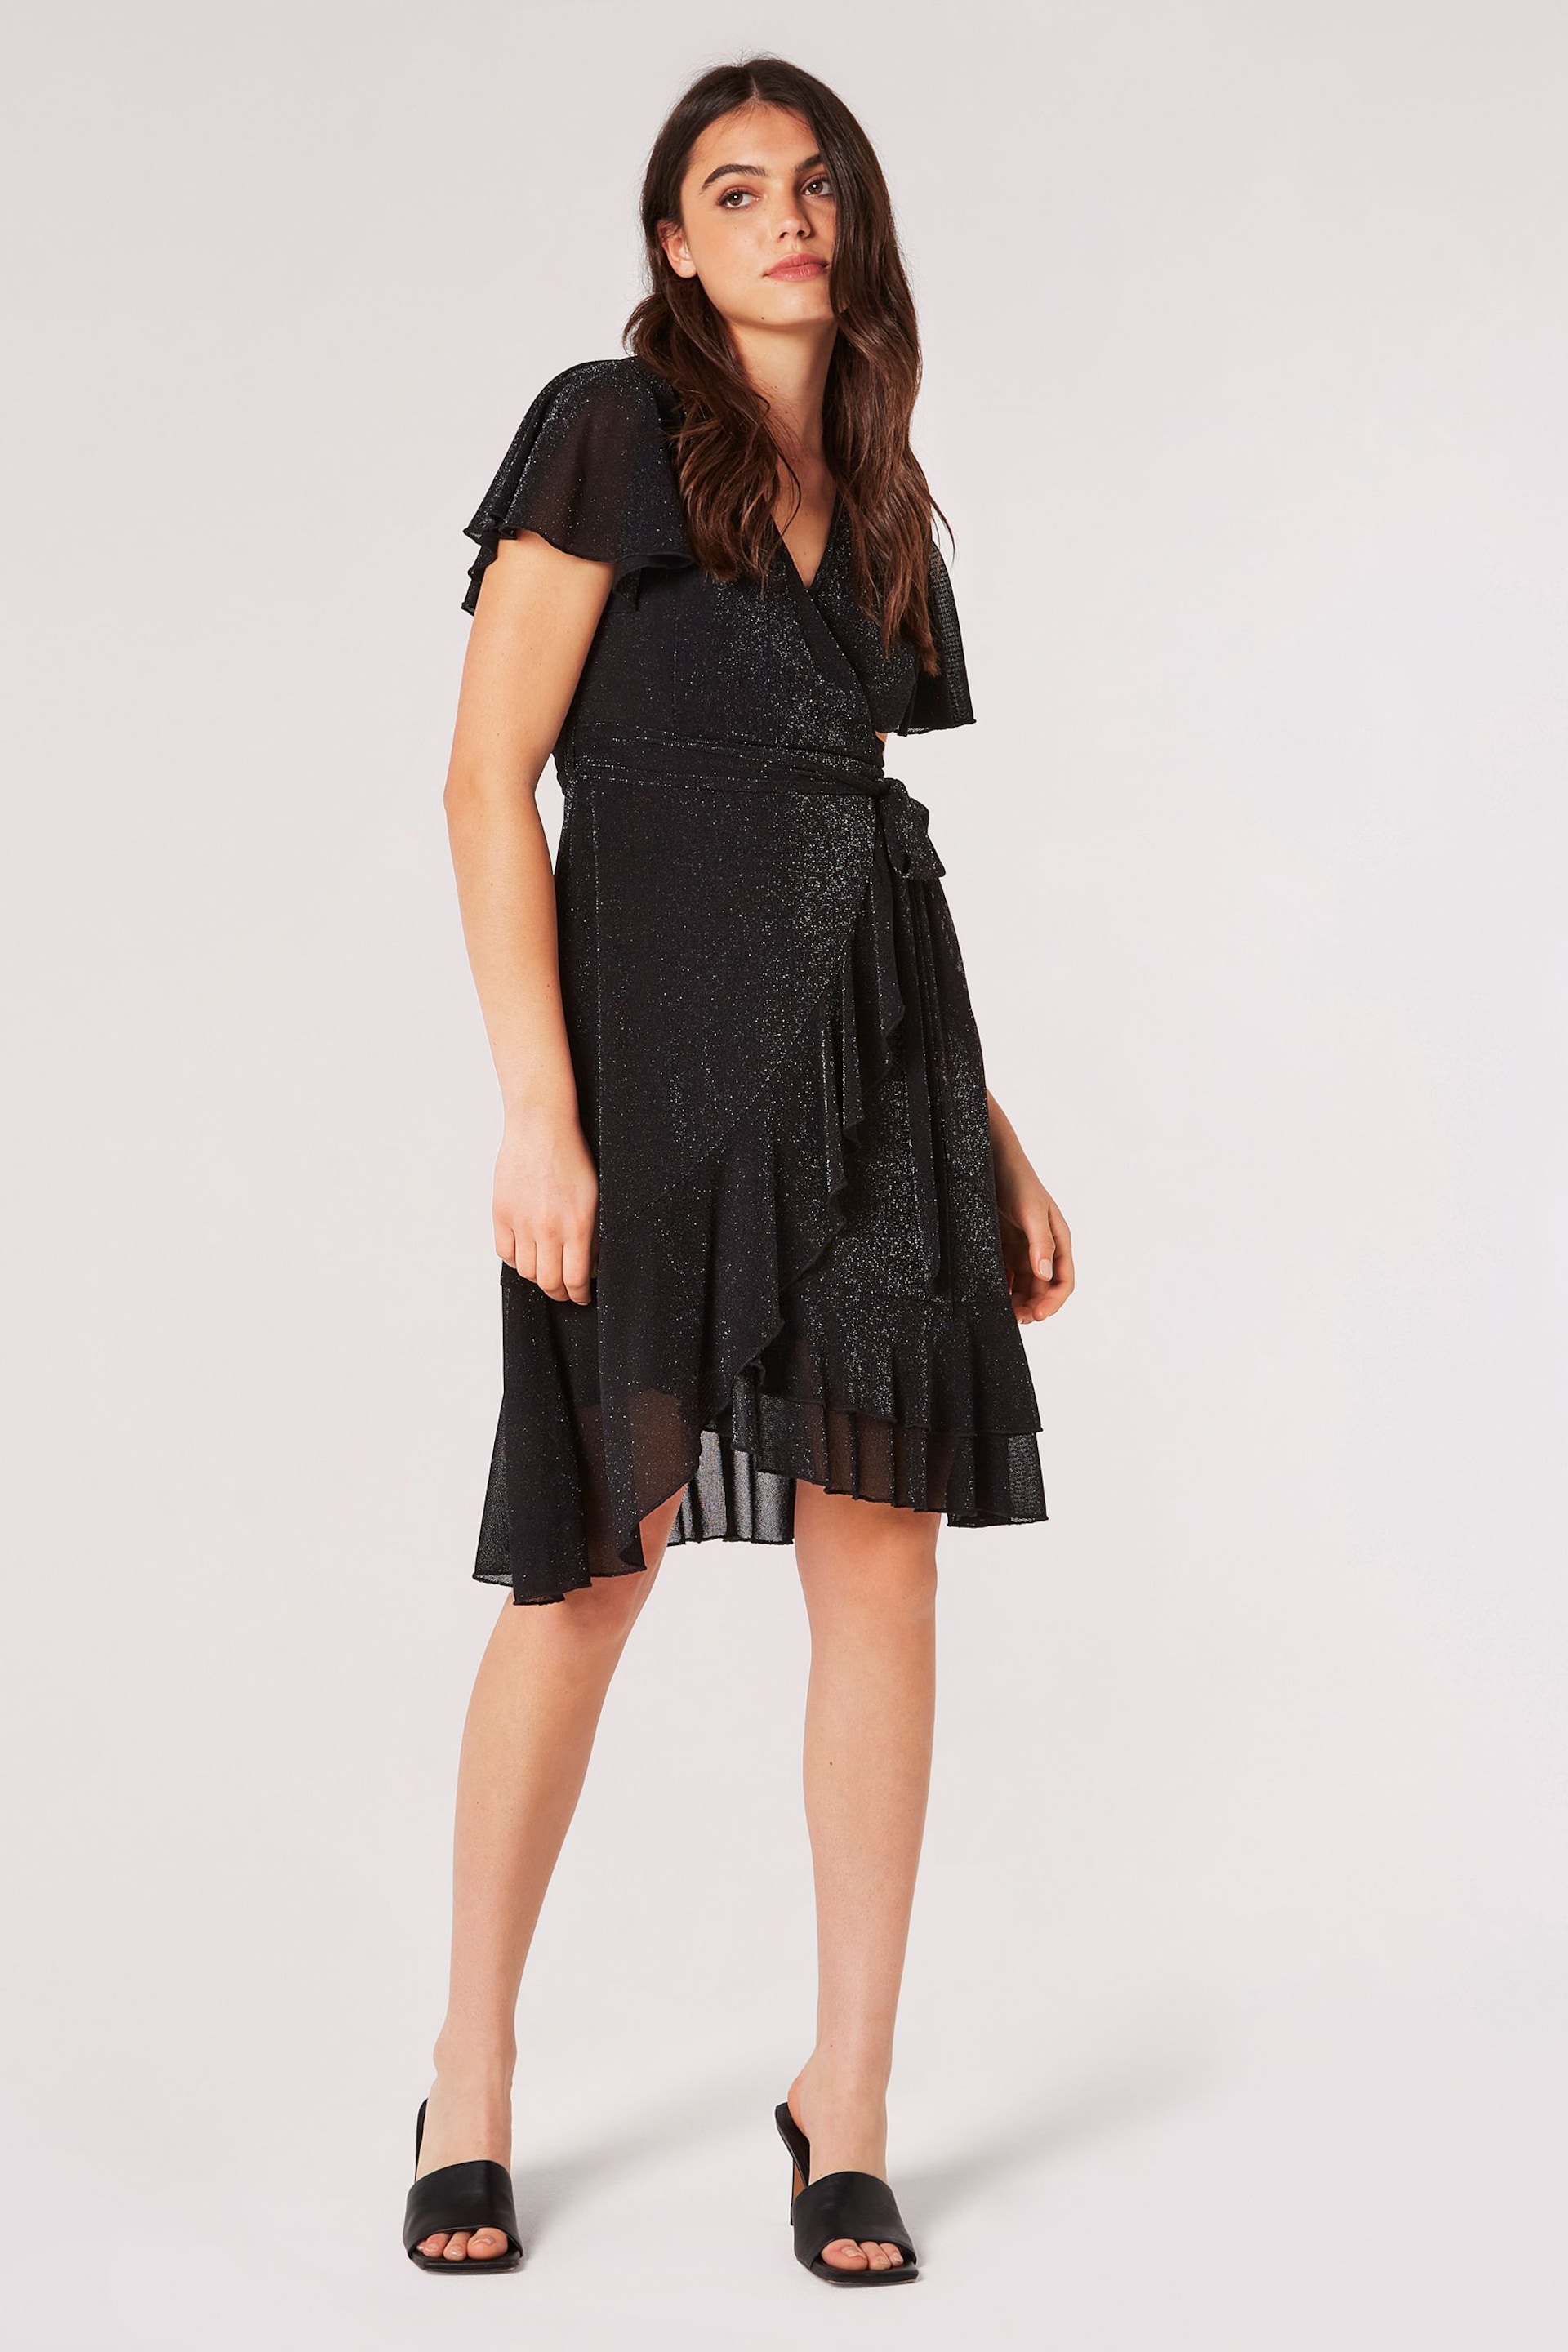 Apricot Black Angel Sleeve Wrap Sparkle Dress - Image 1 of 4